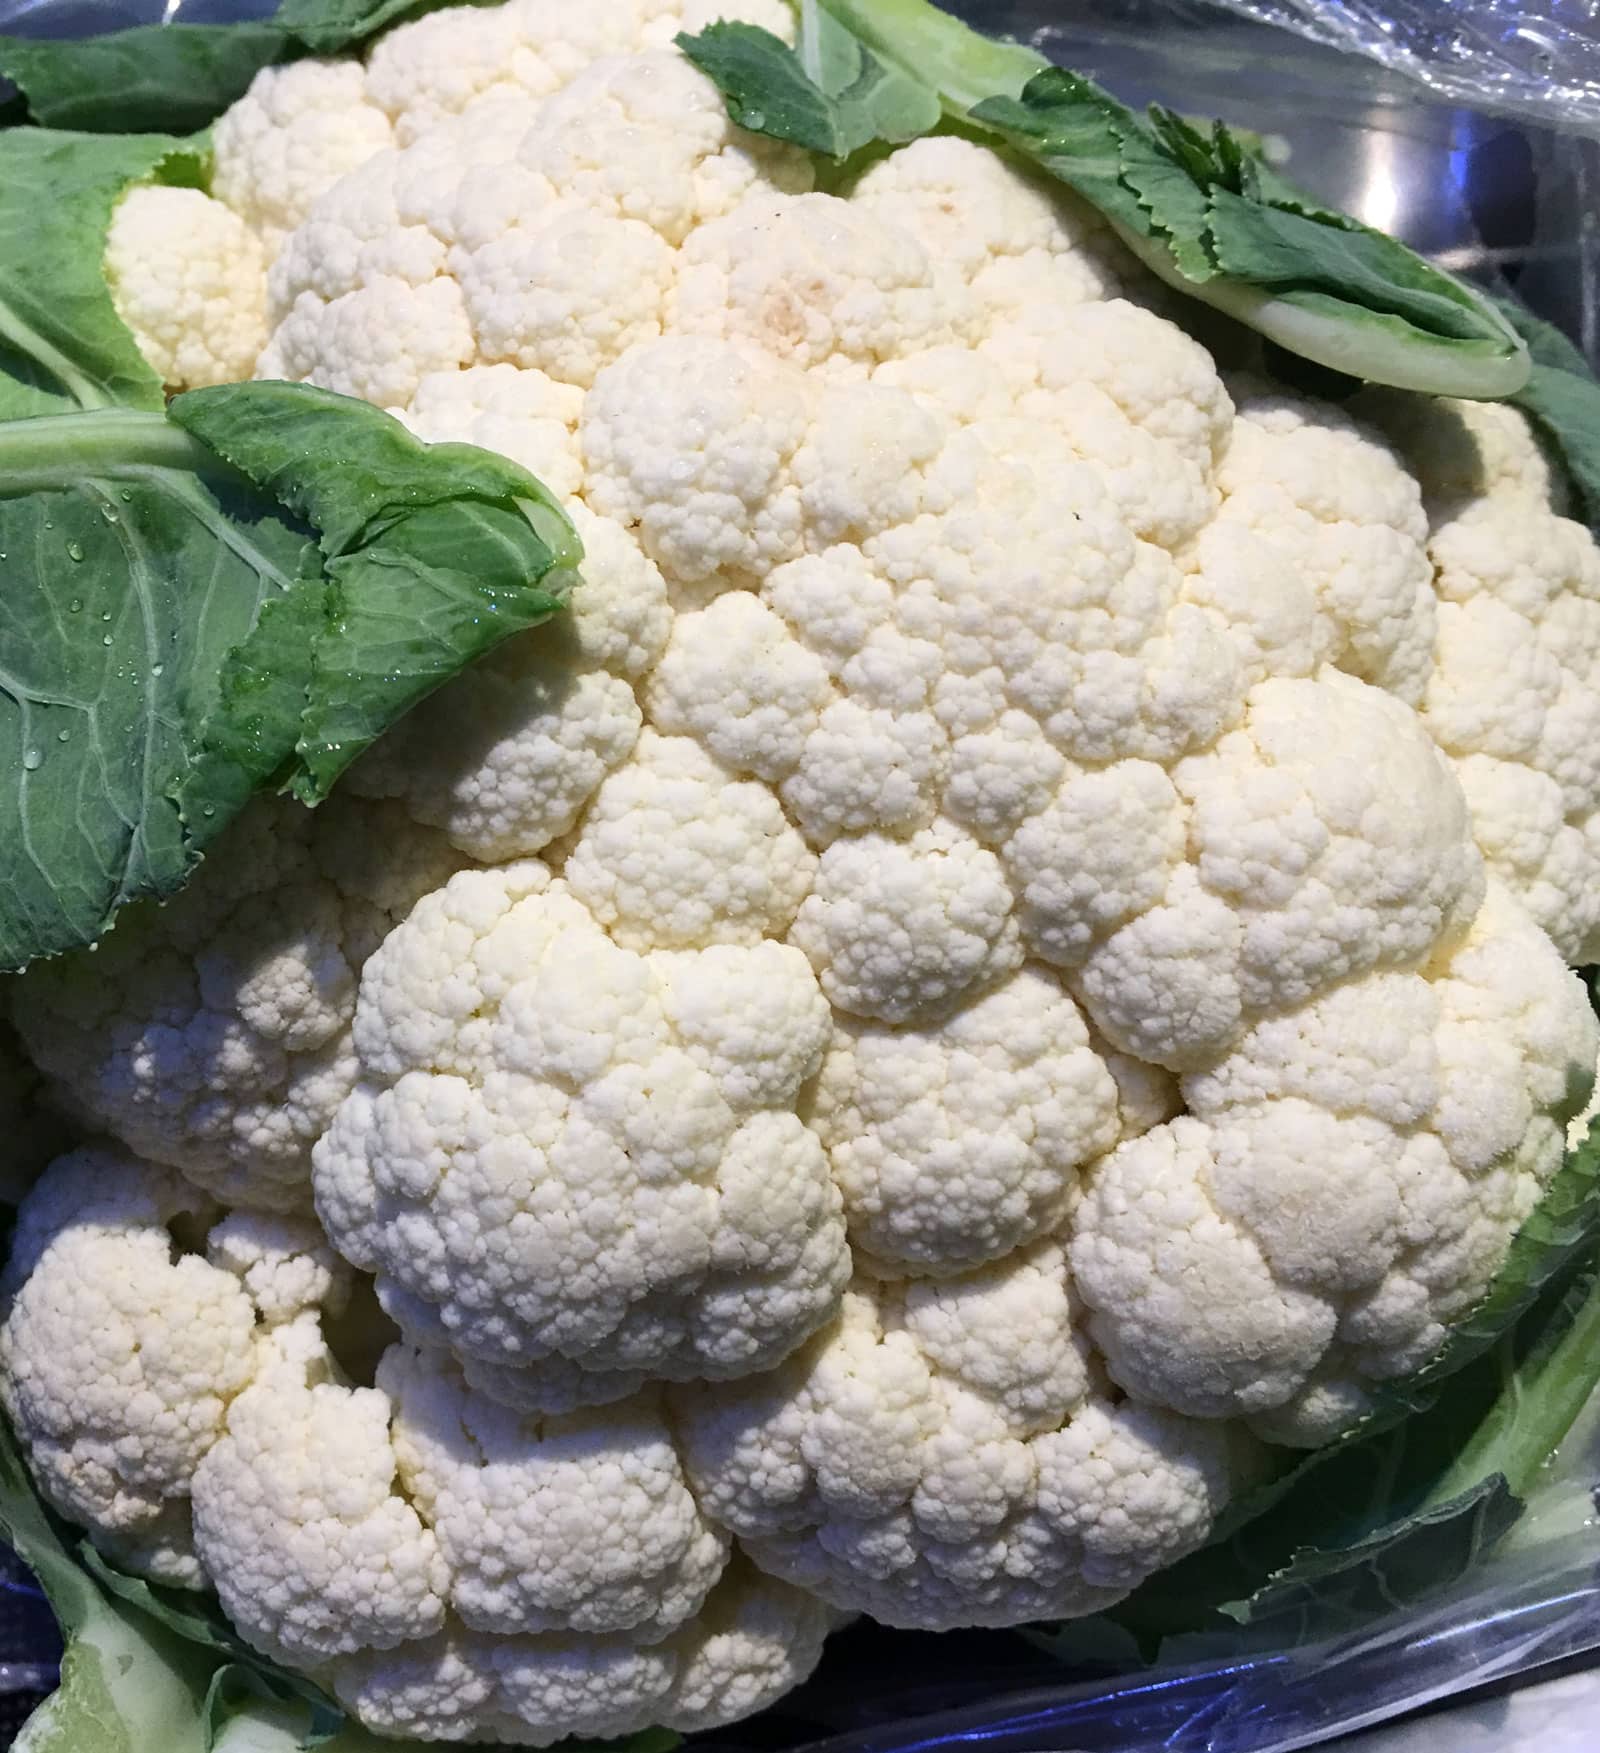 how to cook cauliflower